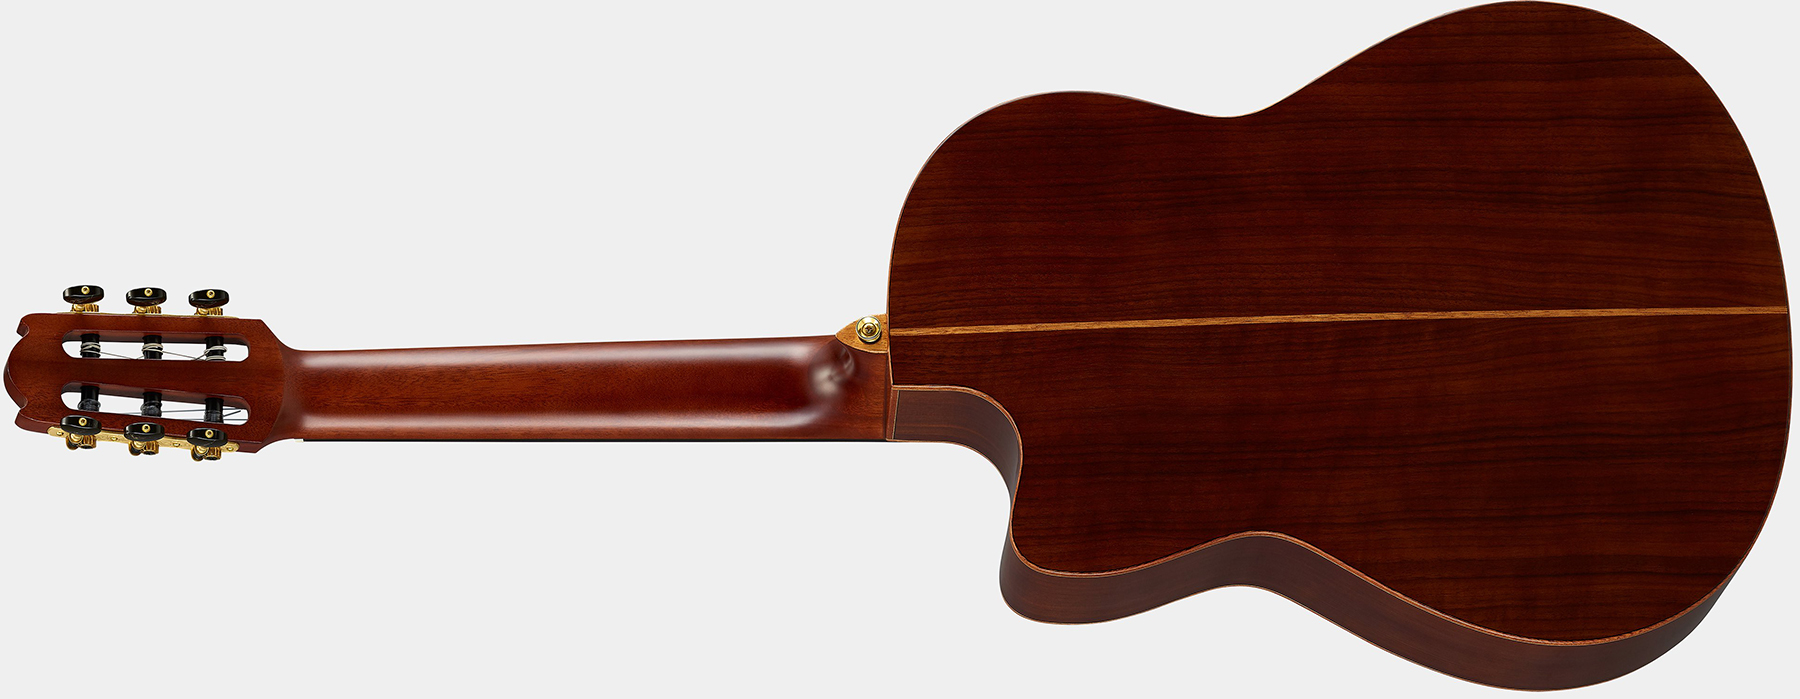 Yamaha Ncx5 Japon 4/4 Cw Epicea Noyer Eb - Natural - Classical guitar 4/4 size - Variation 2